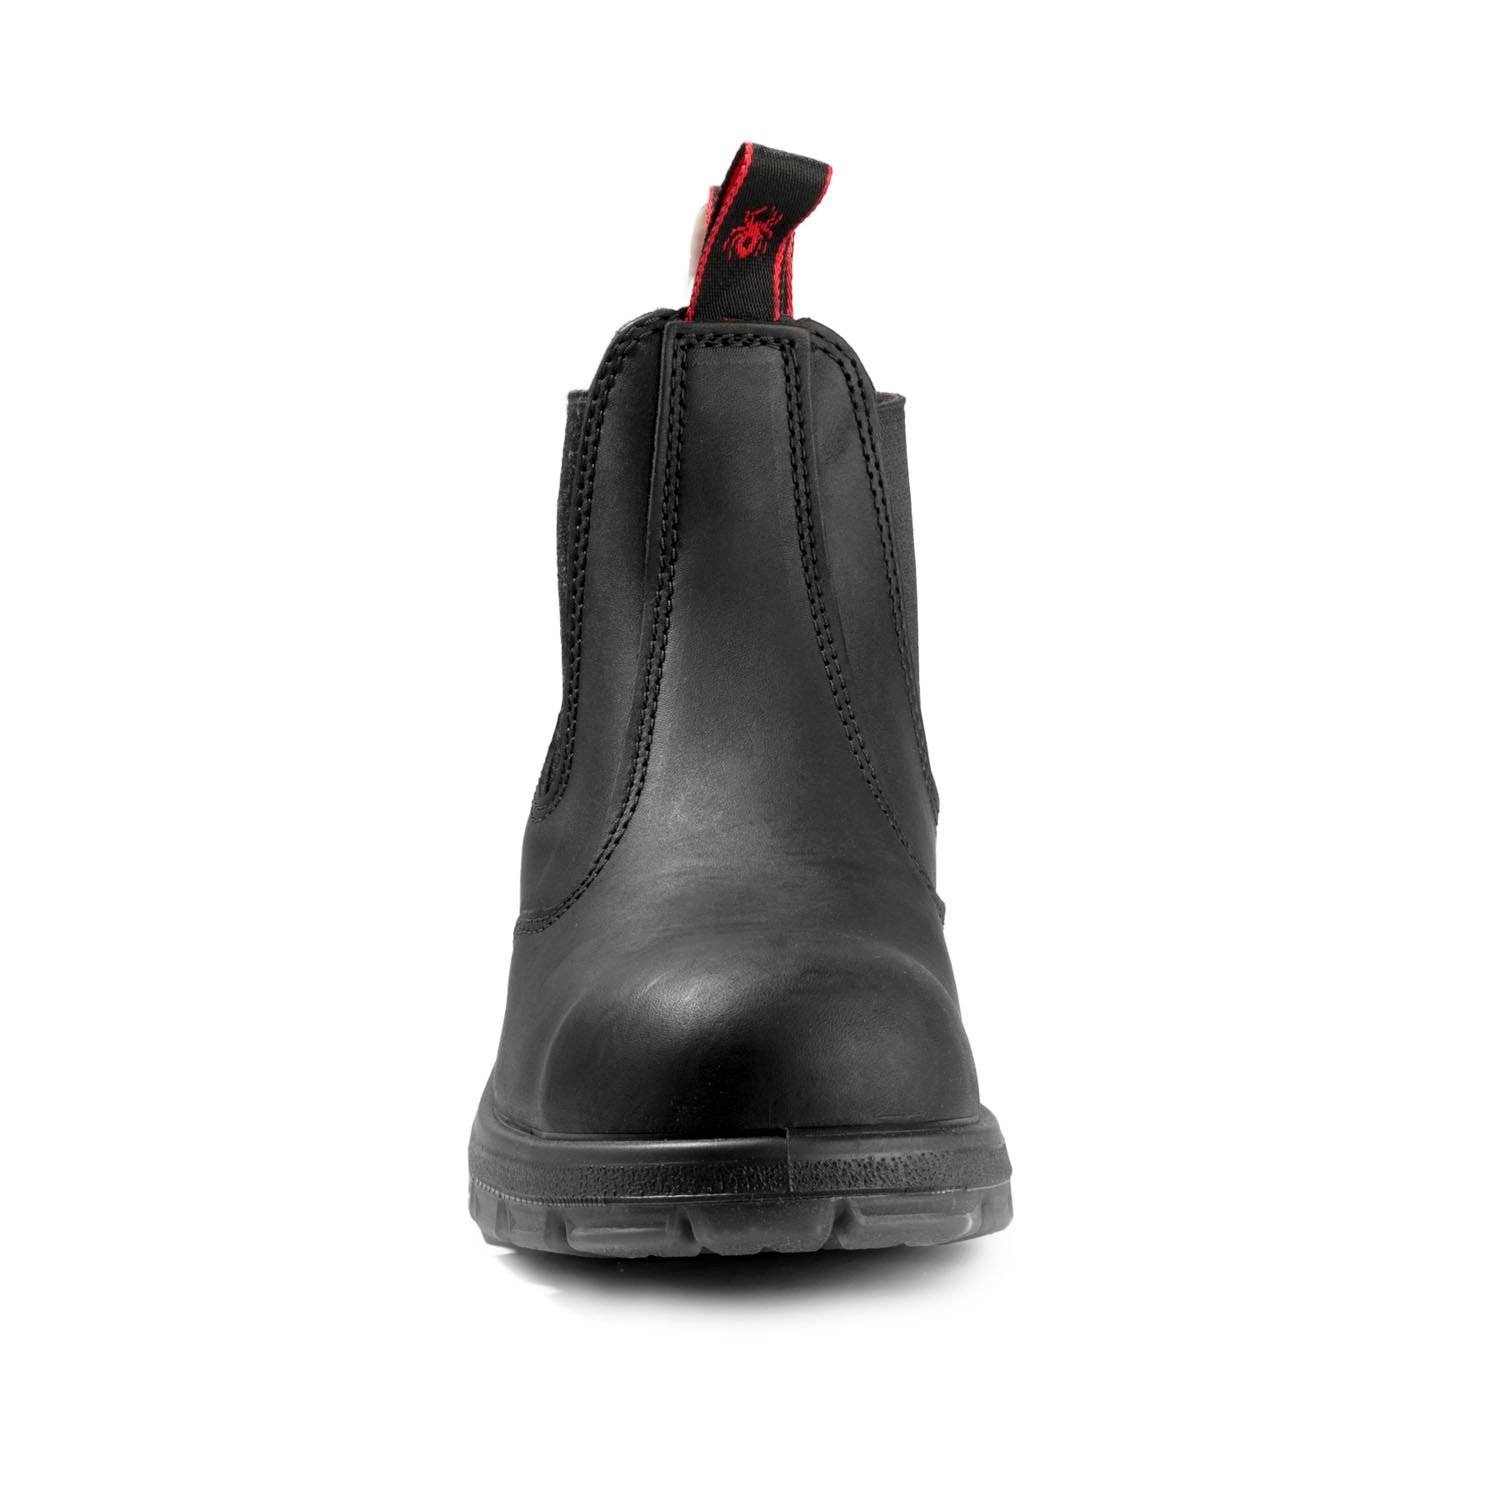 REDBACK BOOTS USBBK Work Boots,Steel,16,Black,PR 